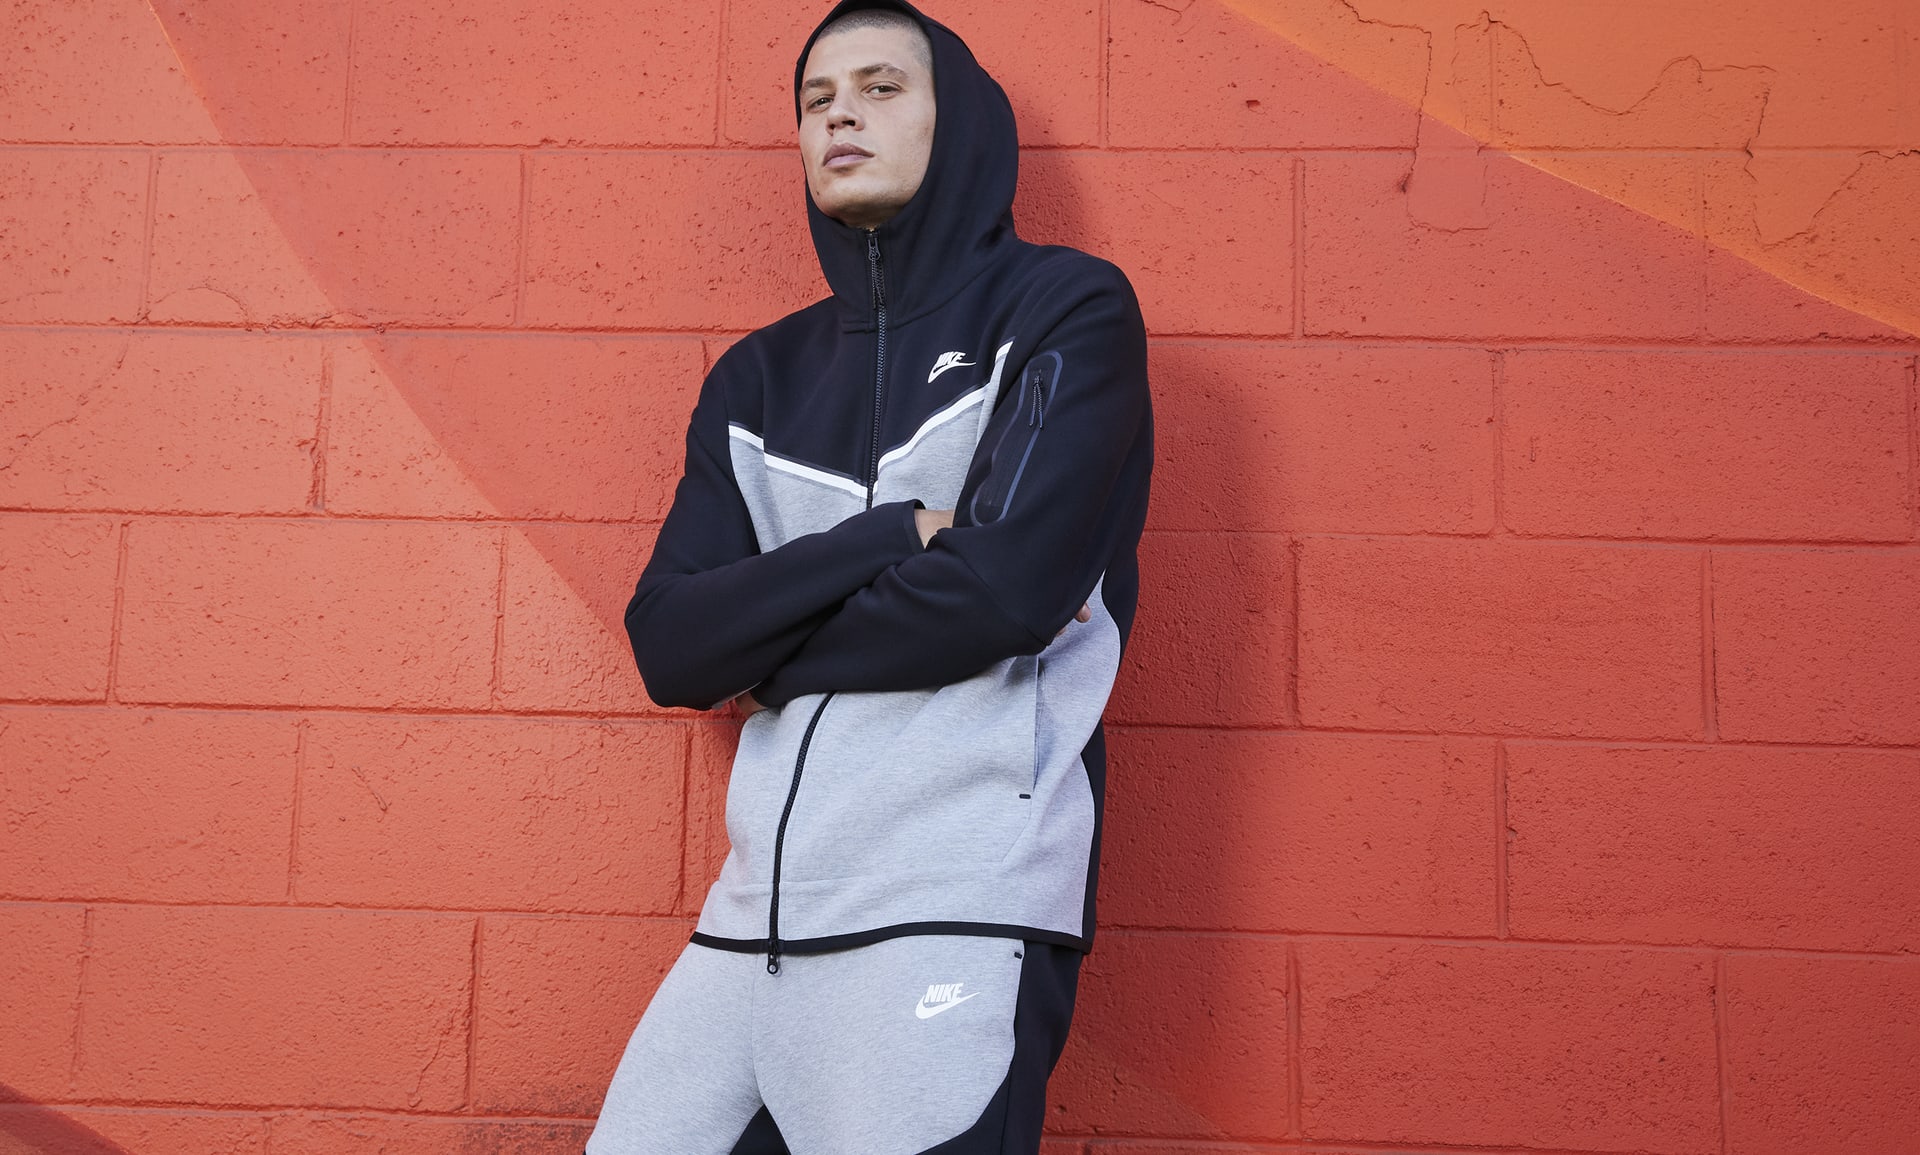 Nike Tch Flc Mens Active Hoodies Size 3XL, Color: Black/Black at   Men's Clothing store